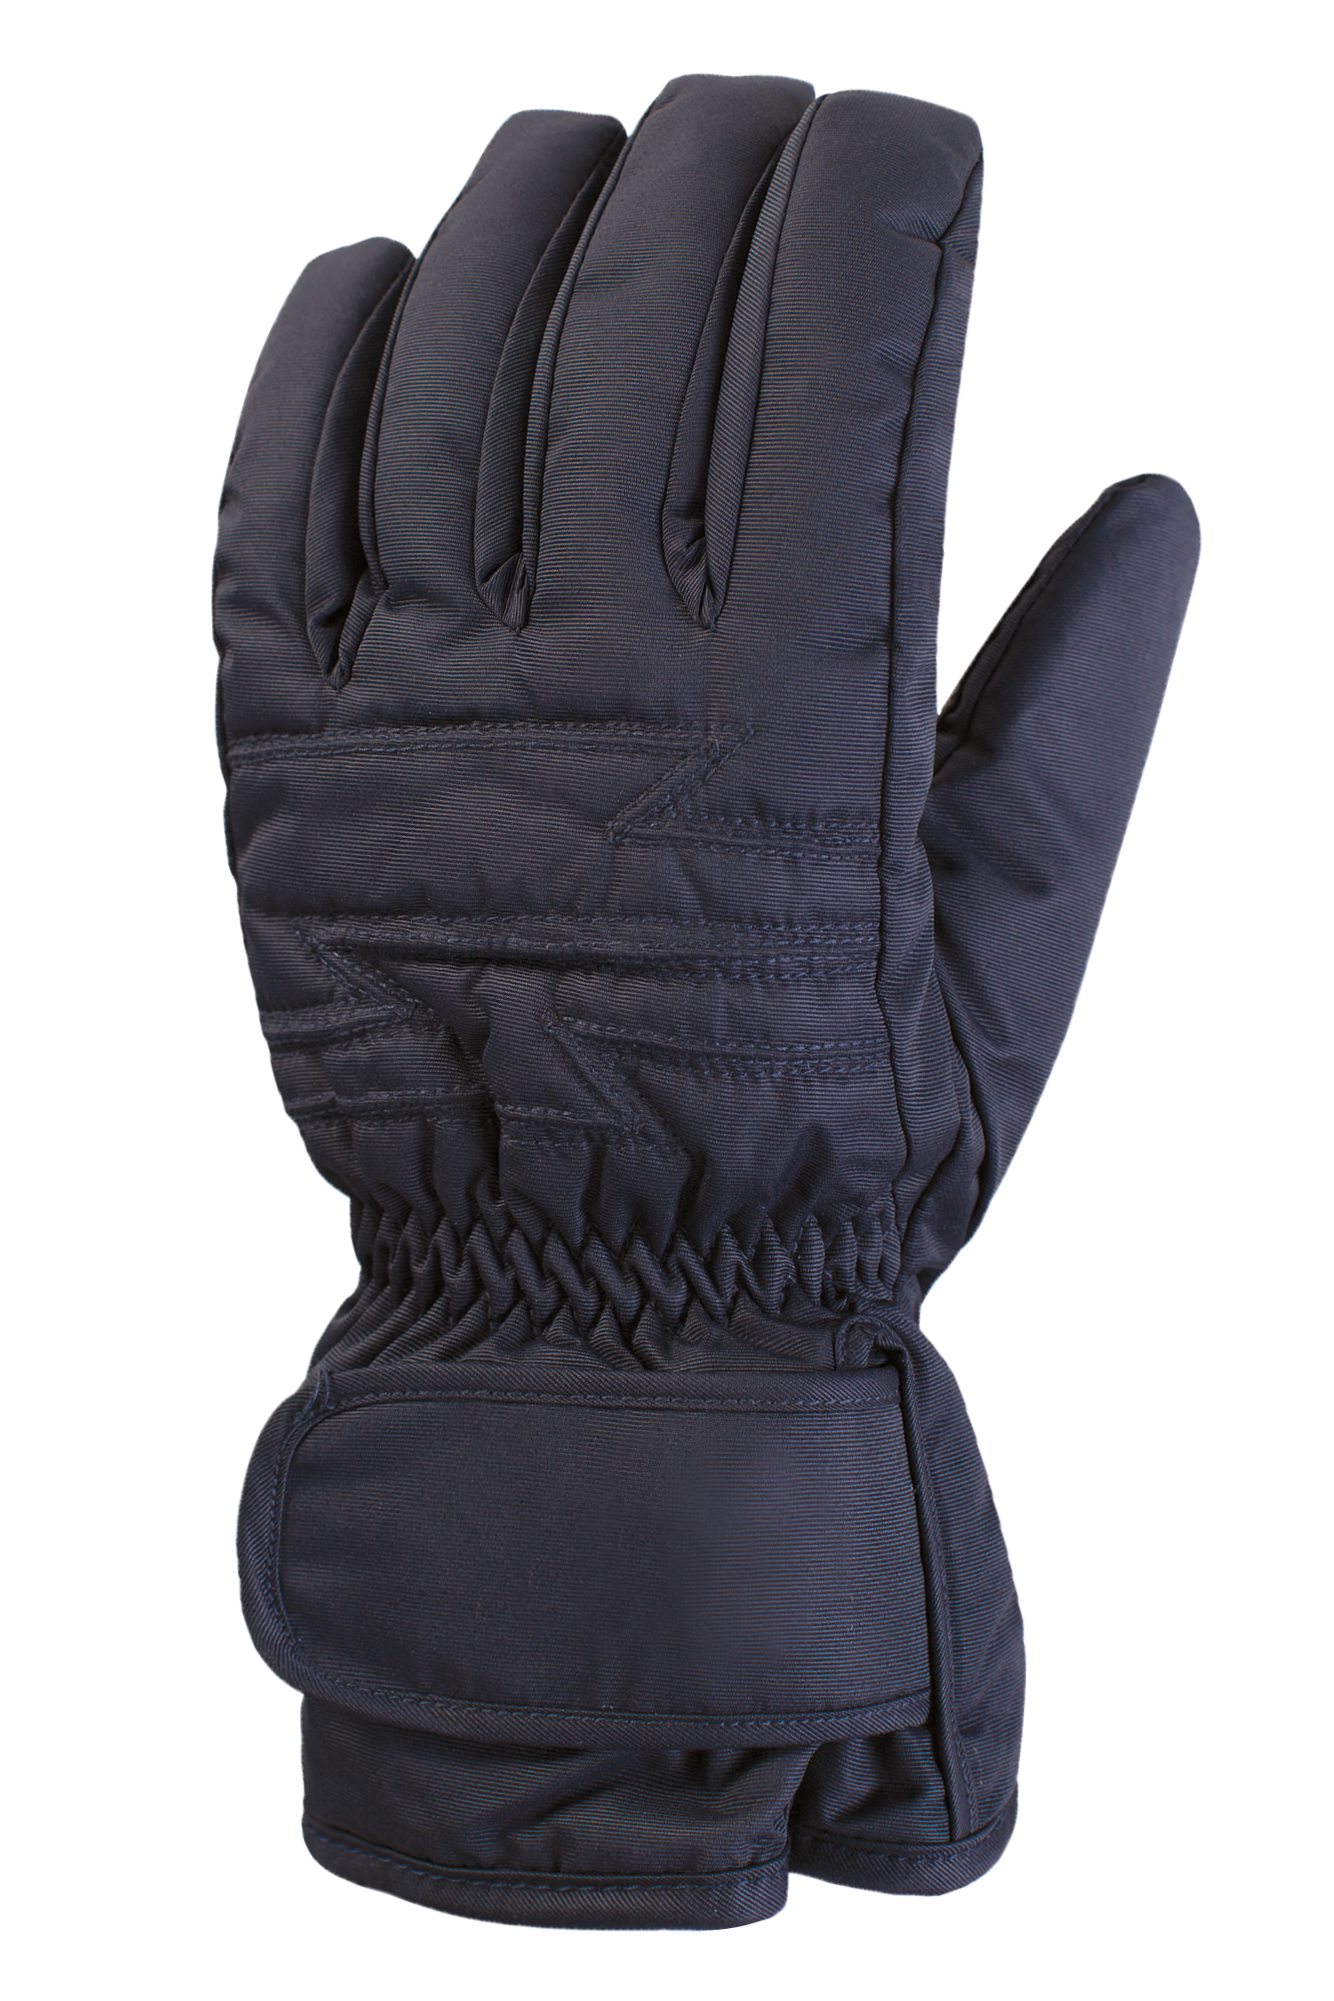 Utah 2 Gloves - Adult, Black